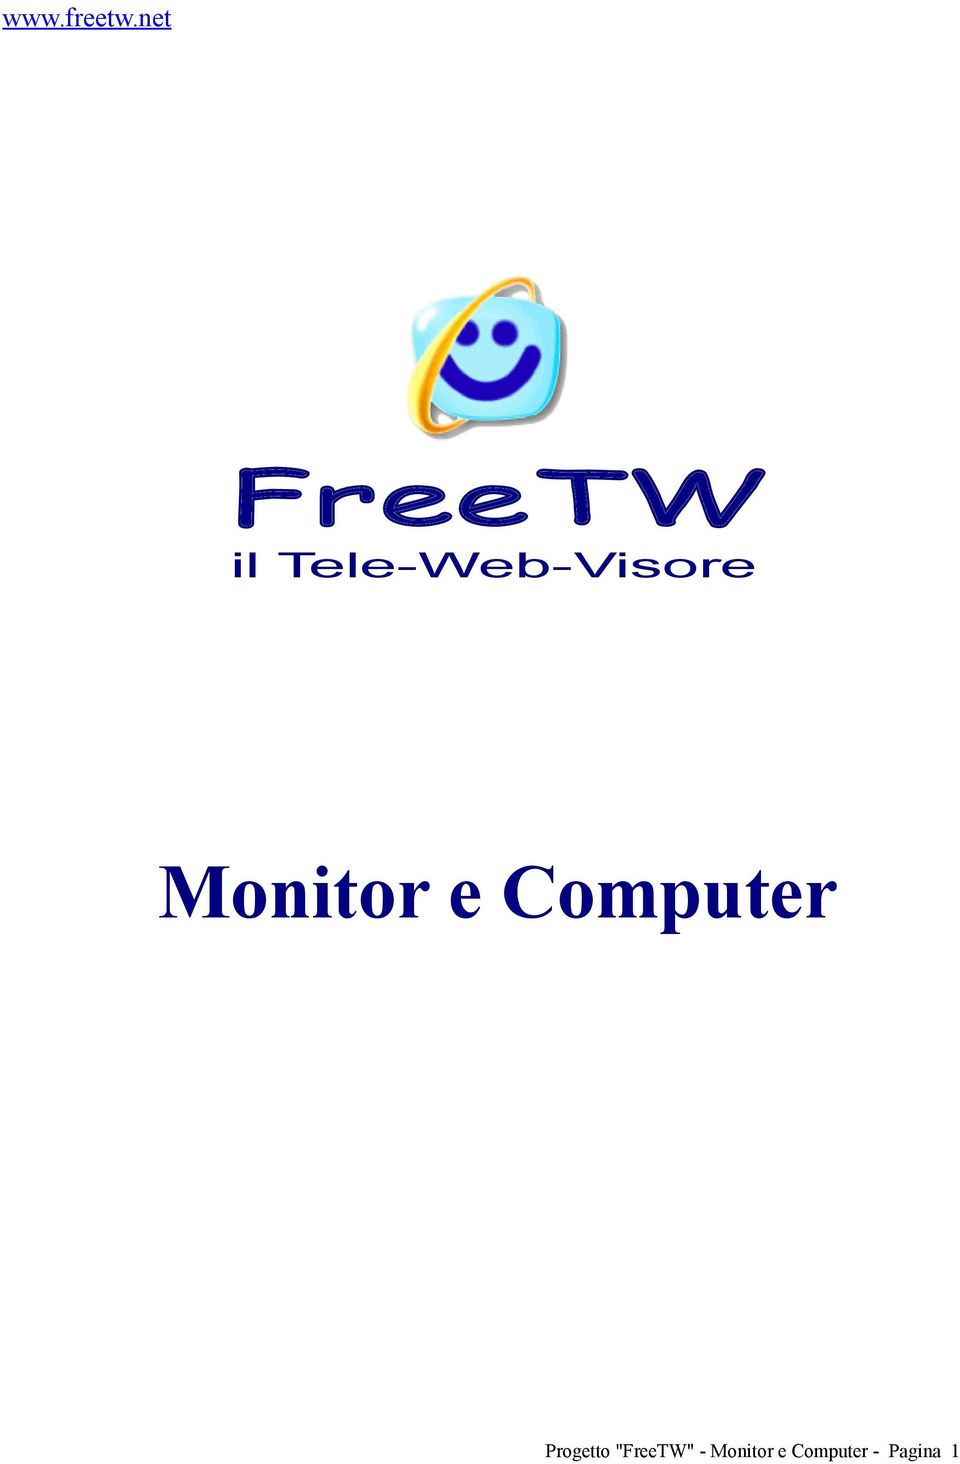 Tele-Web-Visore Monitor e